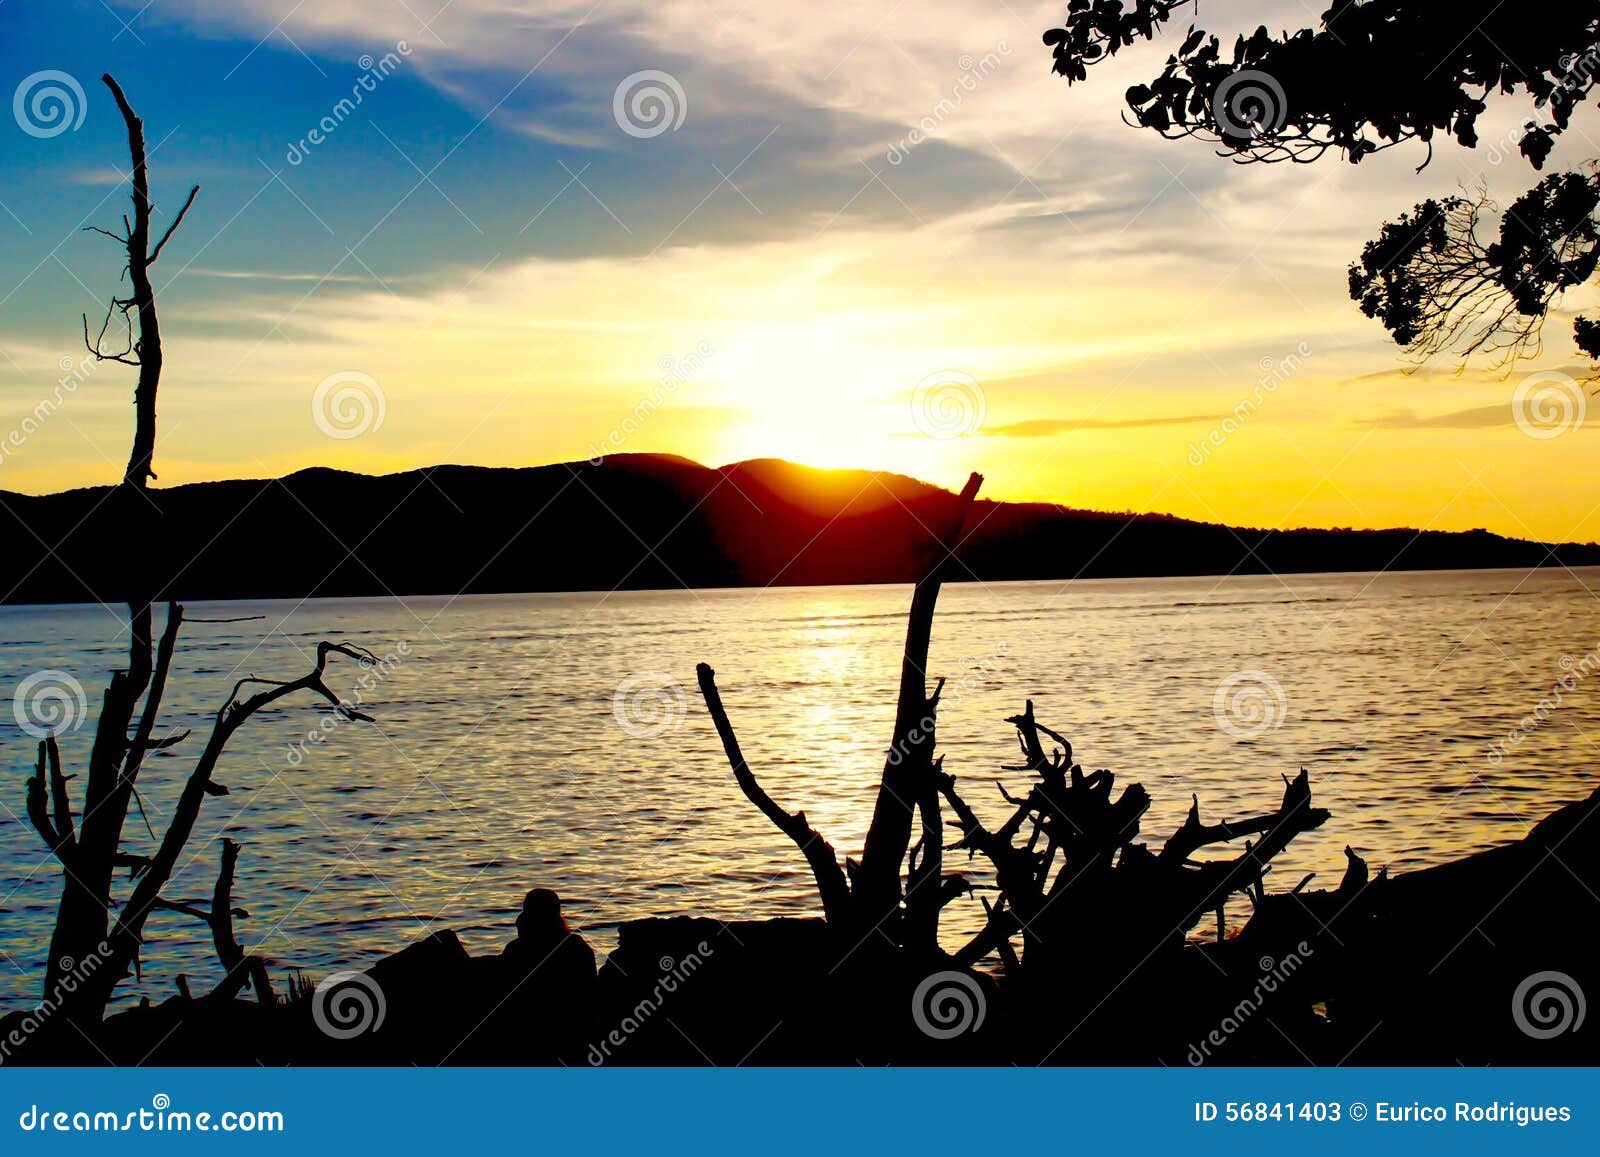 sunset silhouettes the trees at chidiya tapu beach